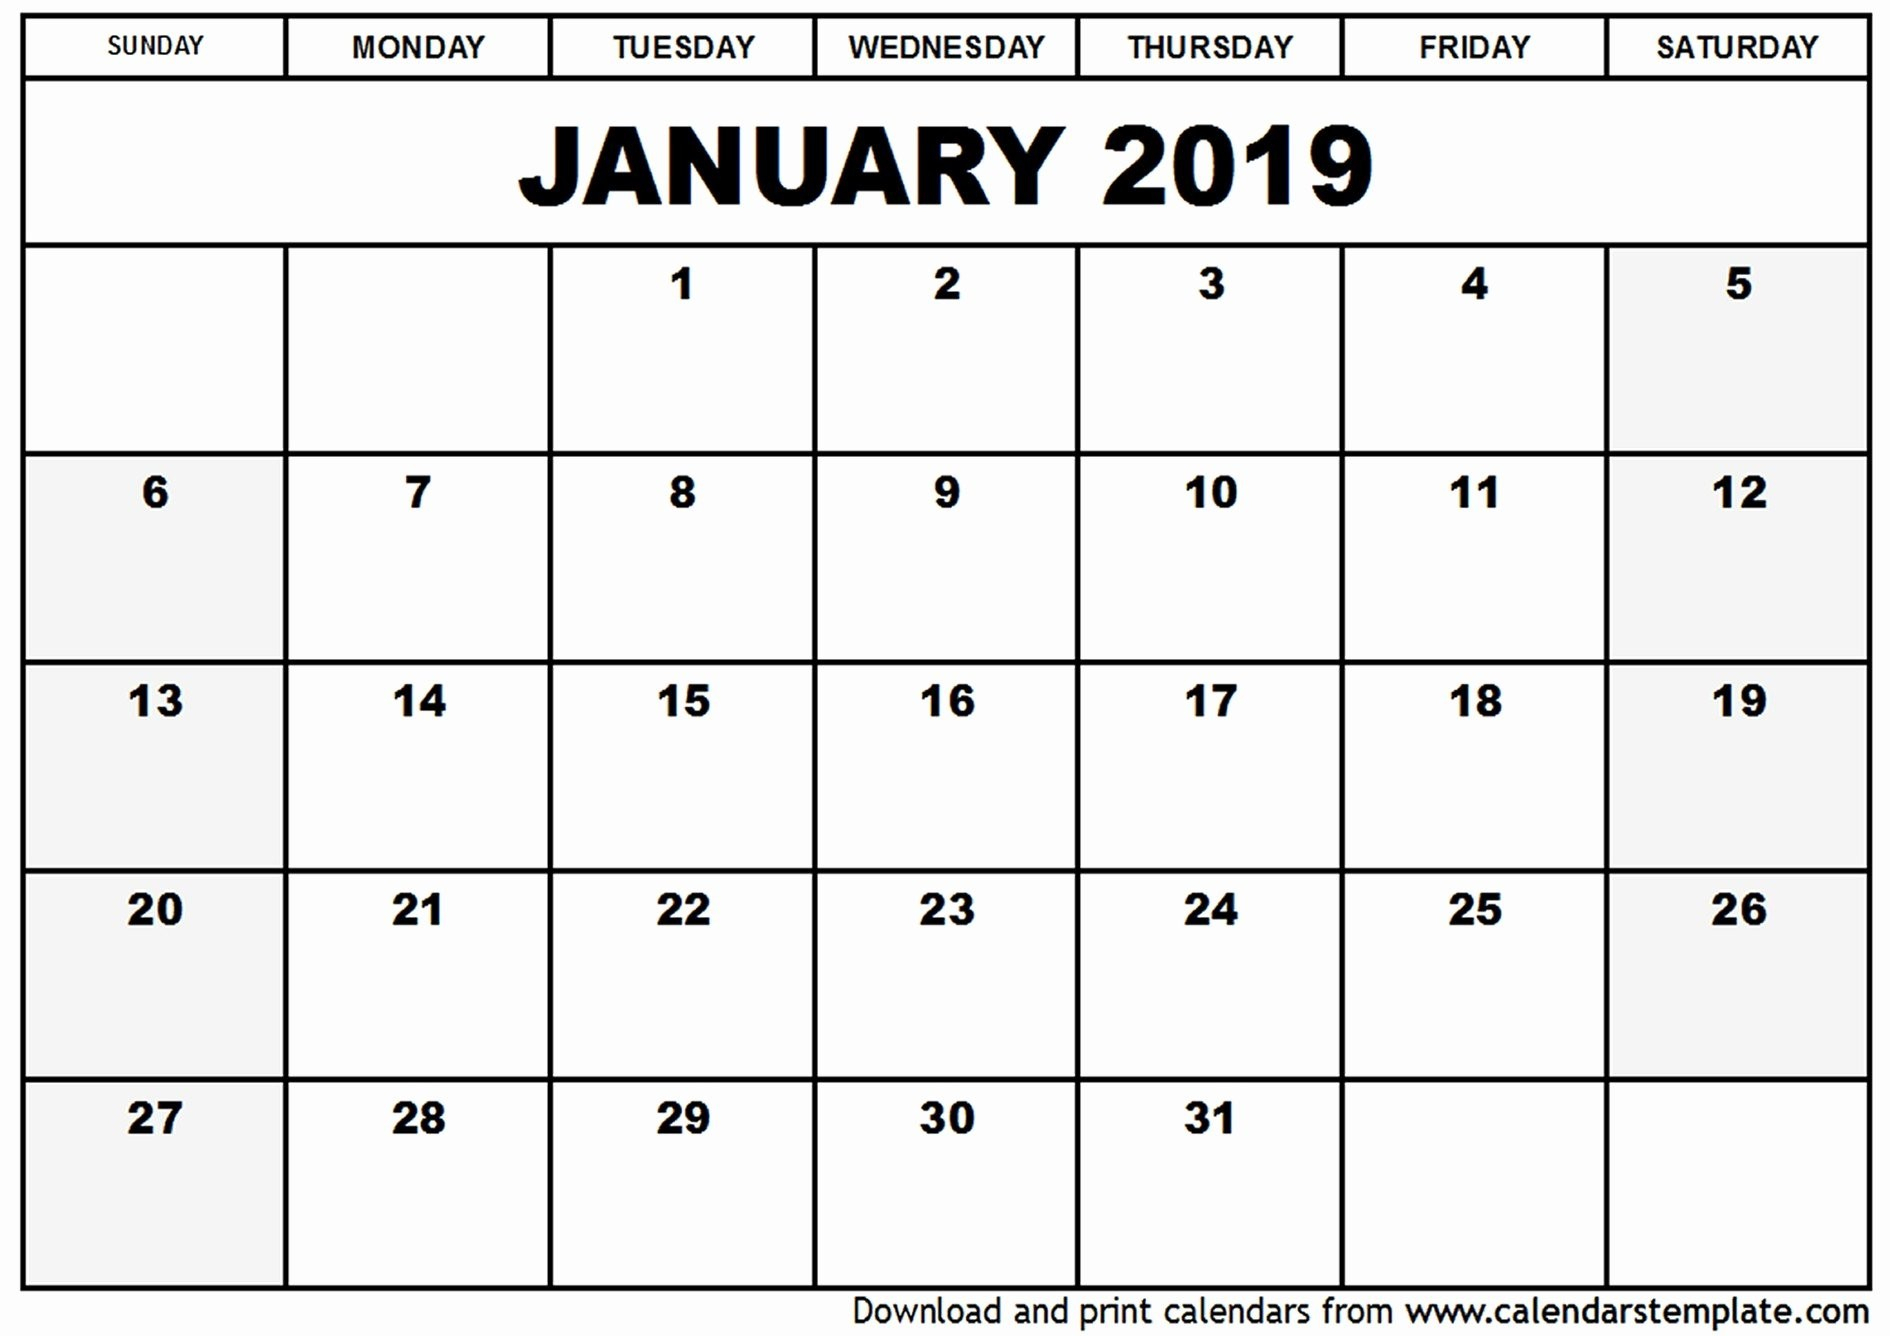 Printable Calendar Labs 2020 Calendar Printables Free Templates